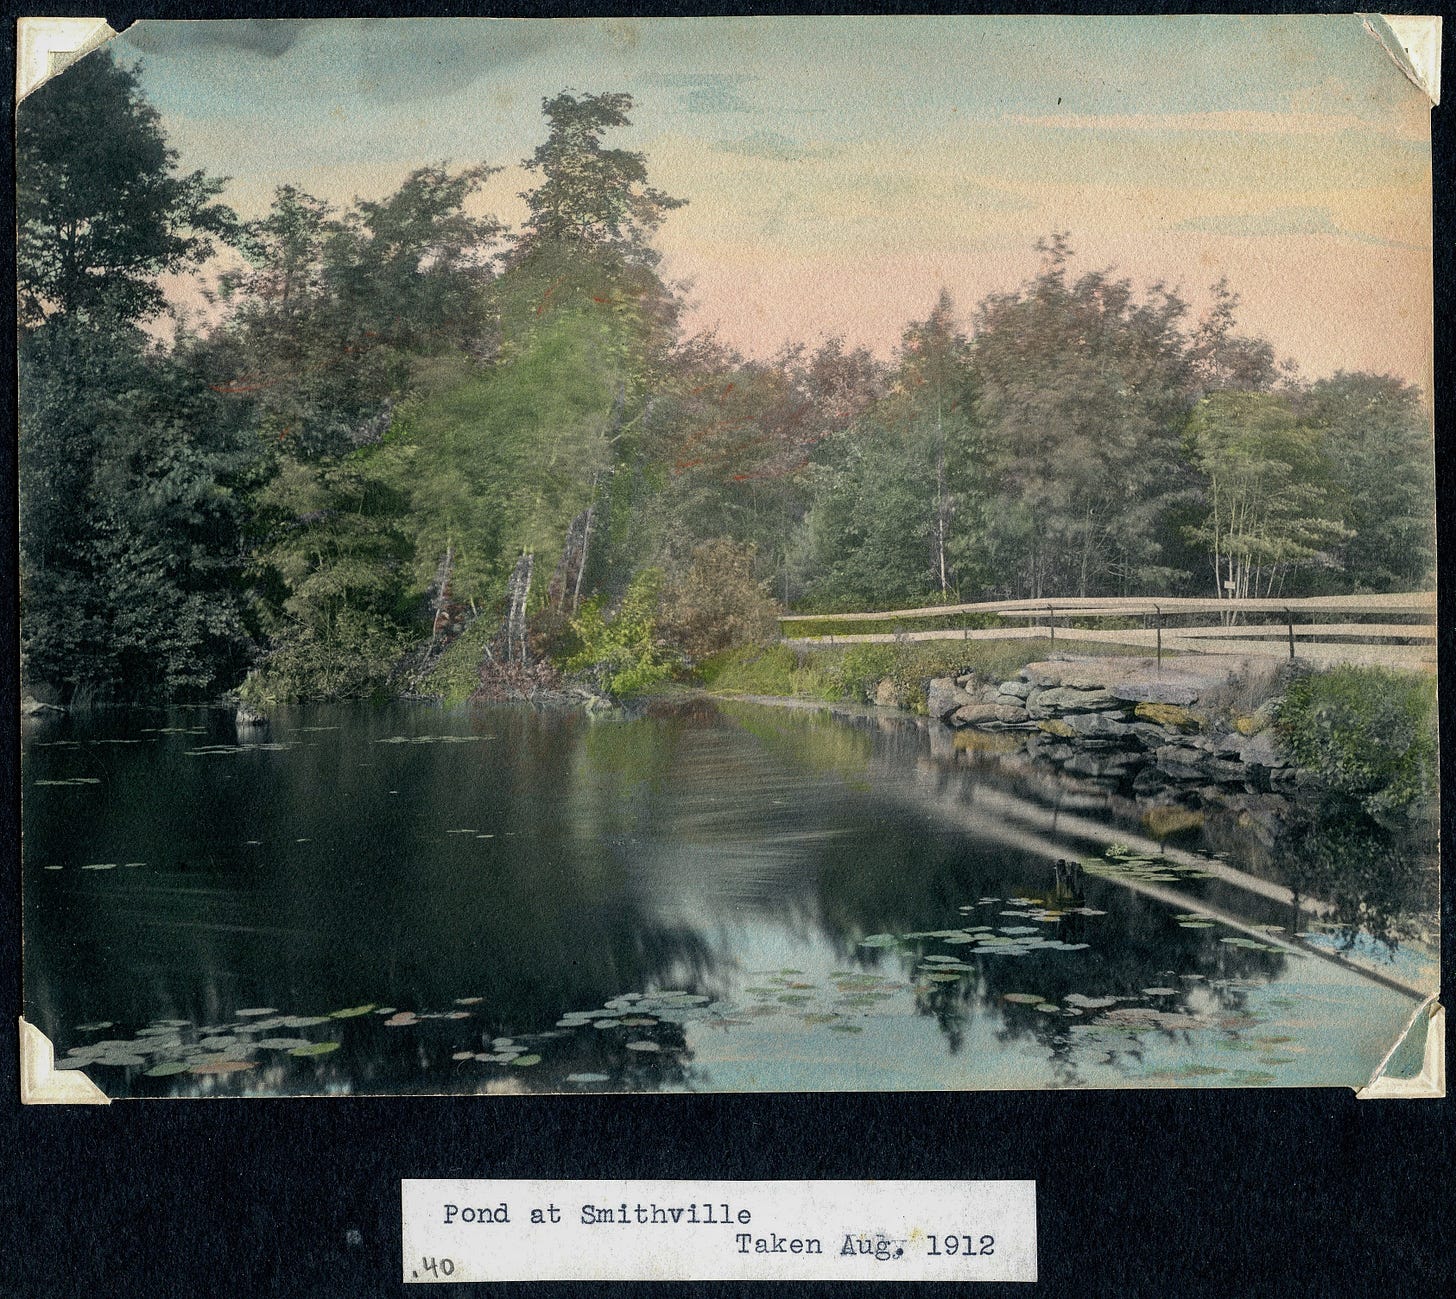 Smithville Pond